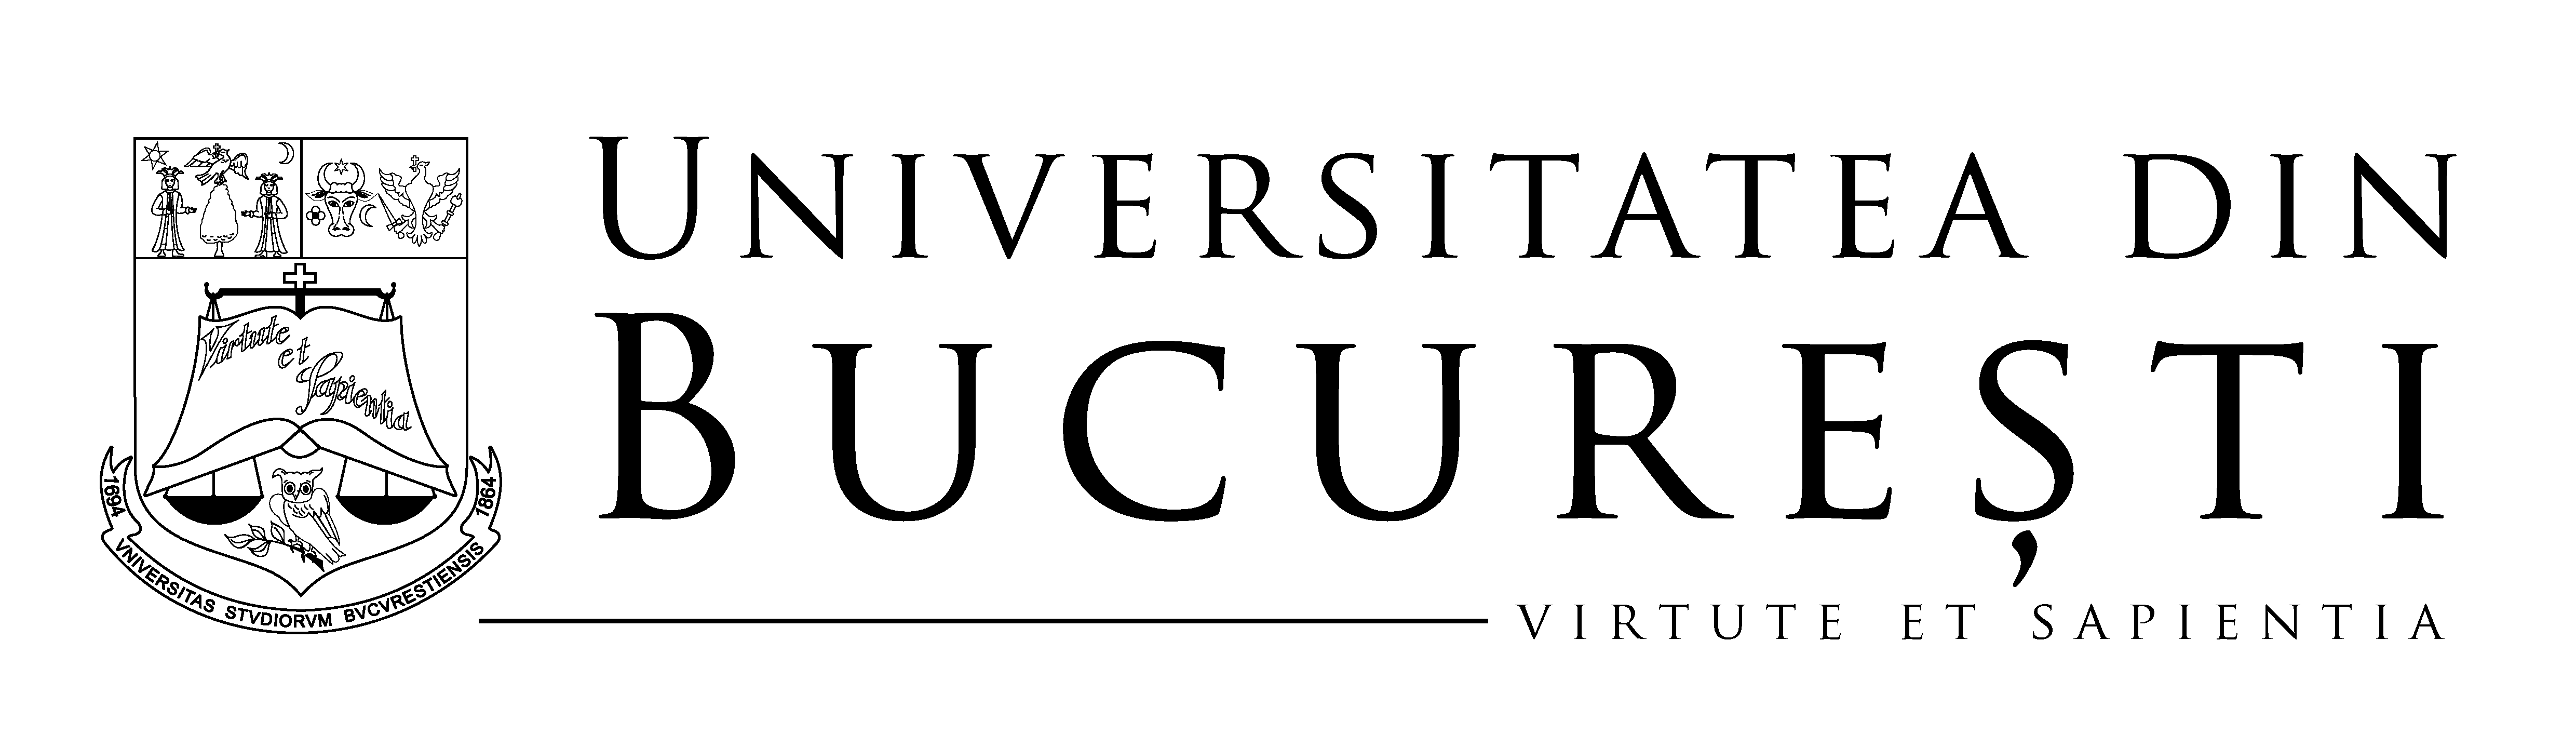 Parteneri_Logo-UB-orizontal-limba-romana-NEGRU.png